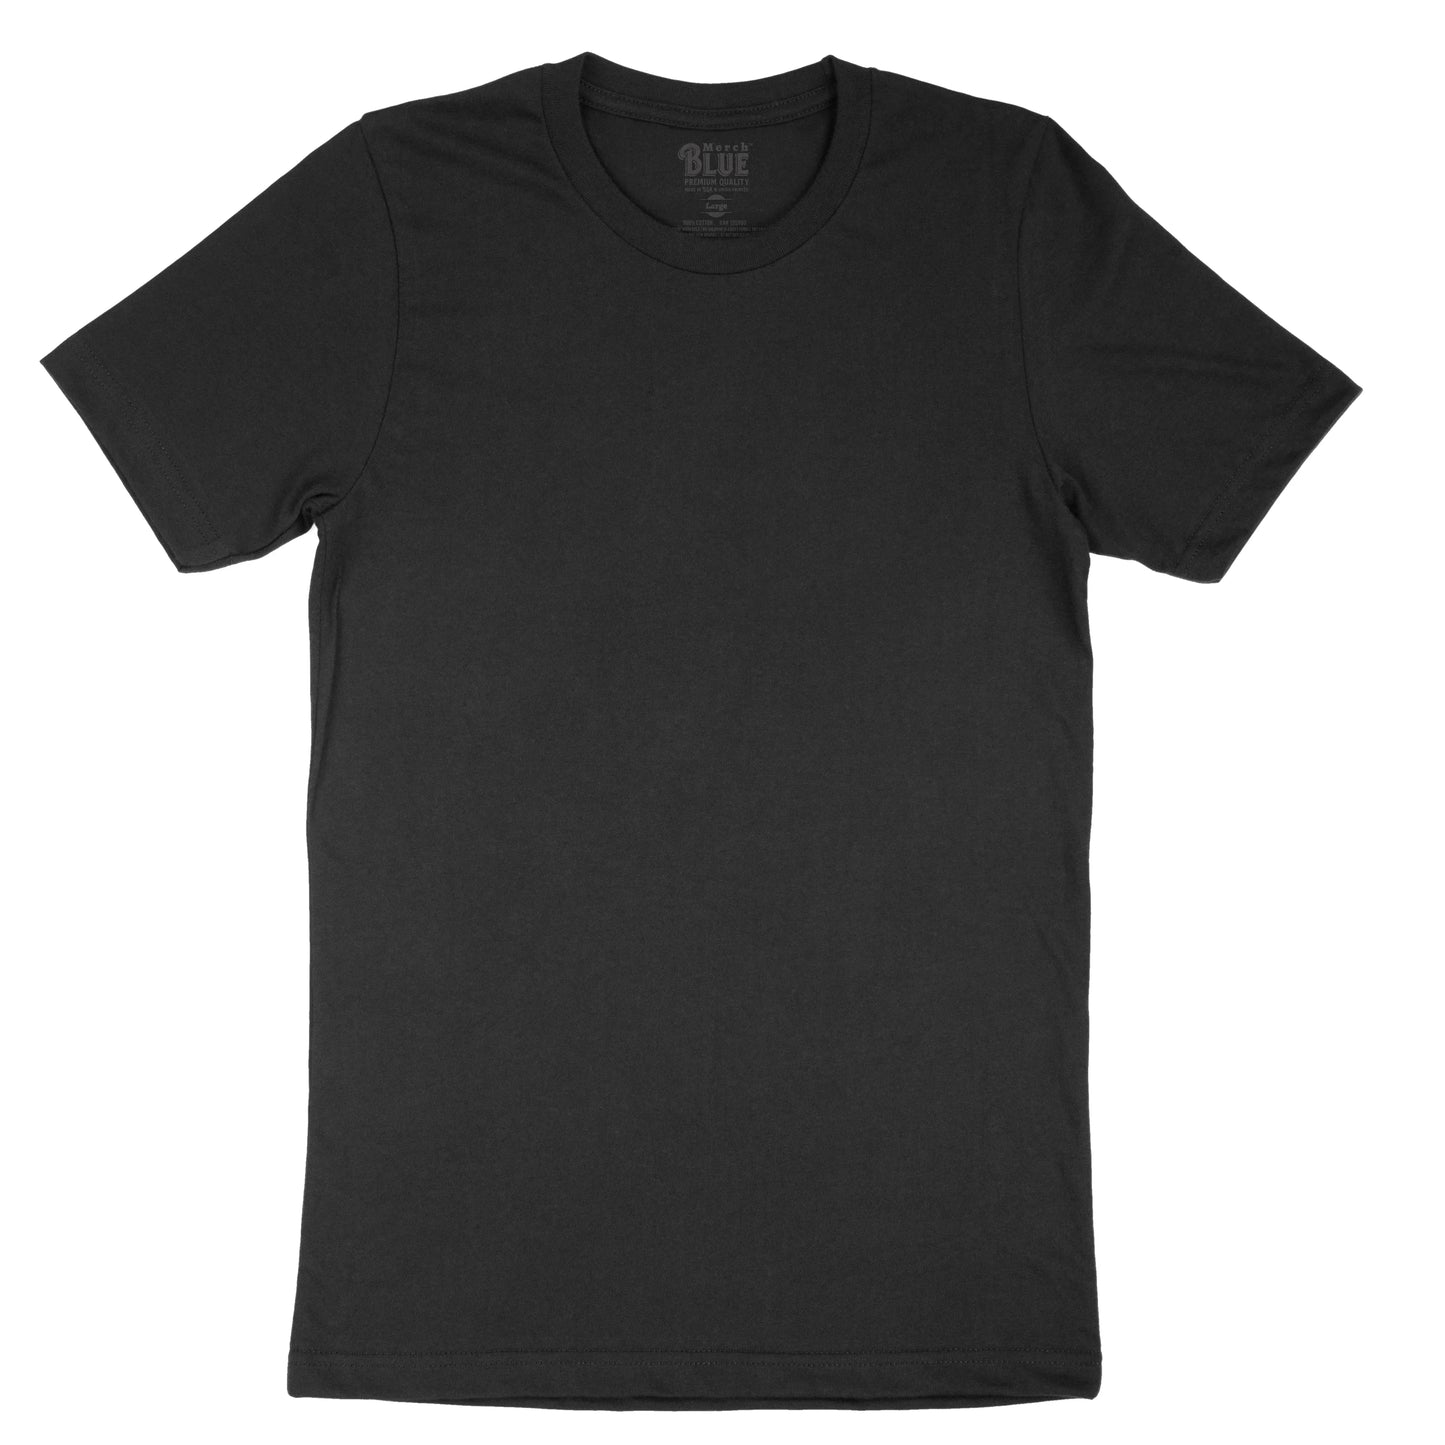 Configure my custom t-shirt for ActBlue - DemParty